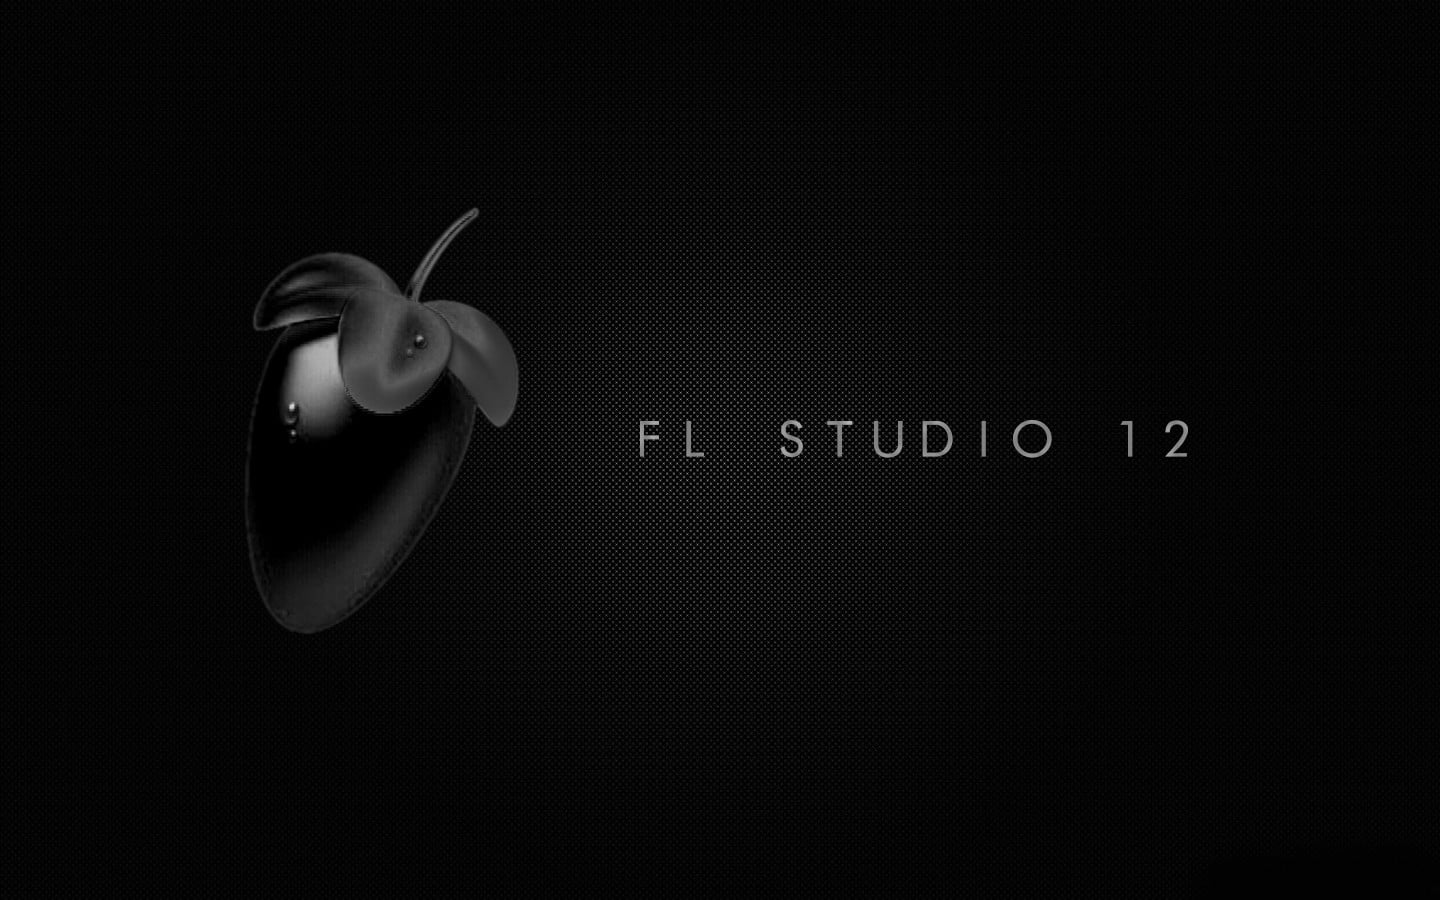 FL Studio 12 Wallpaper Free FL Studio 12 Background